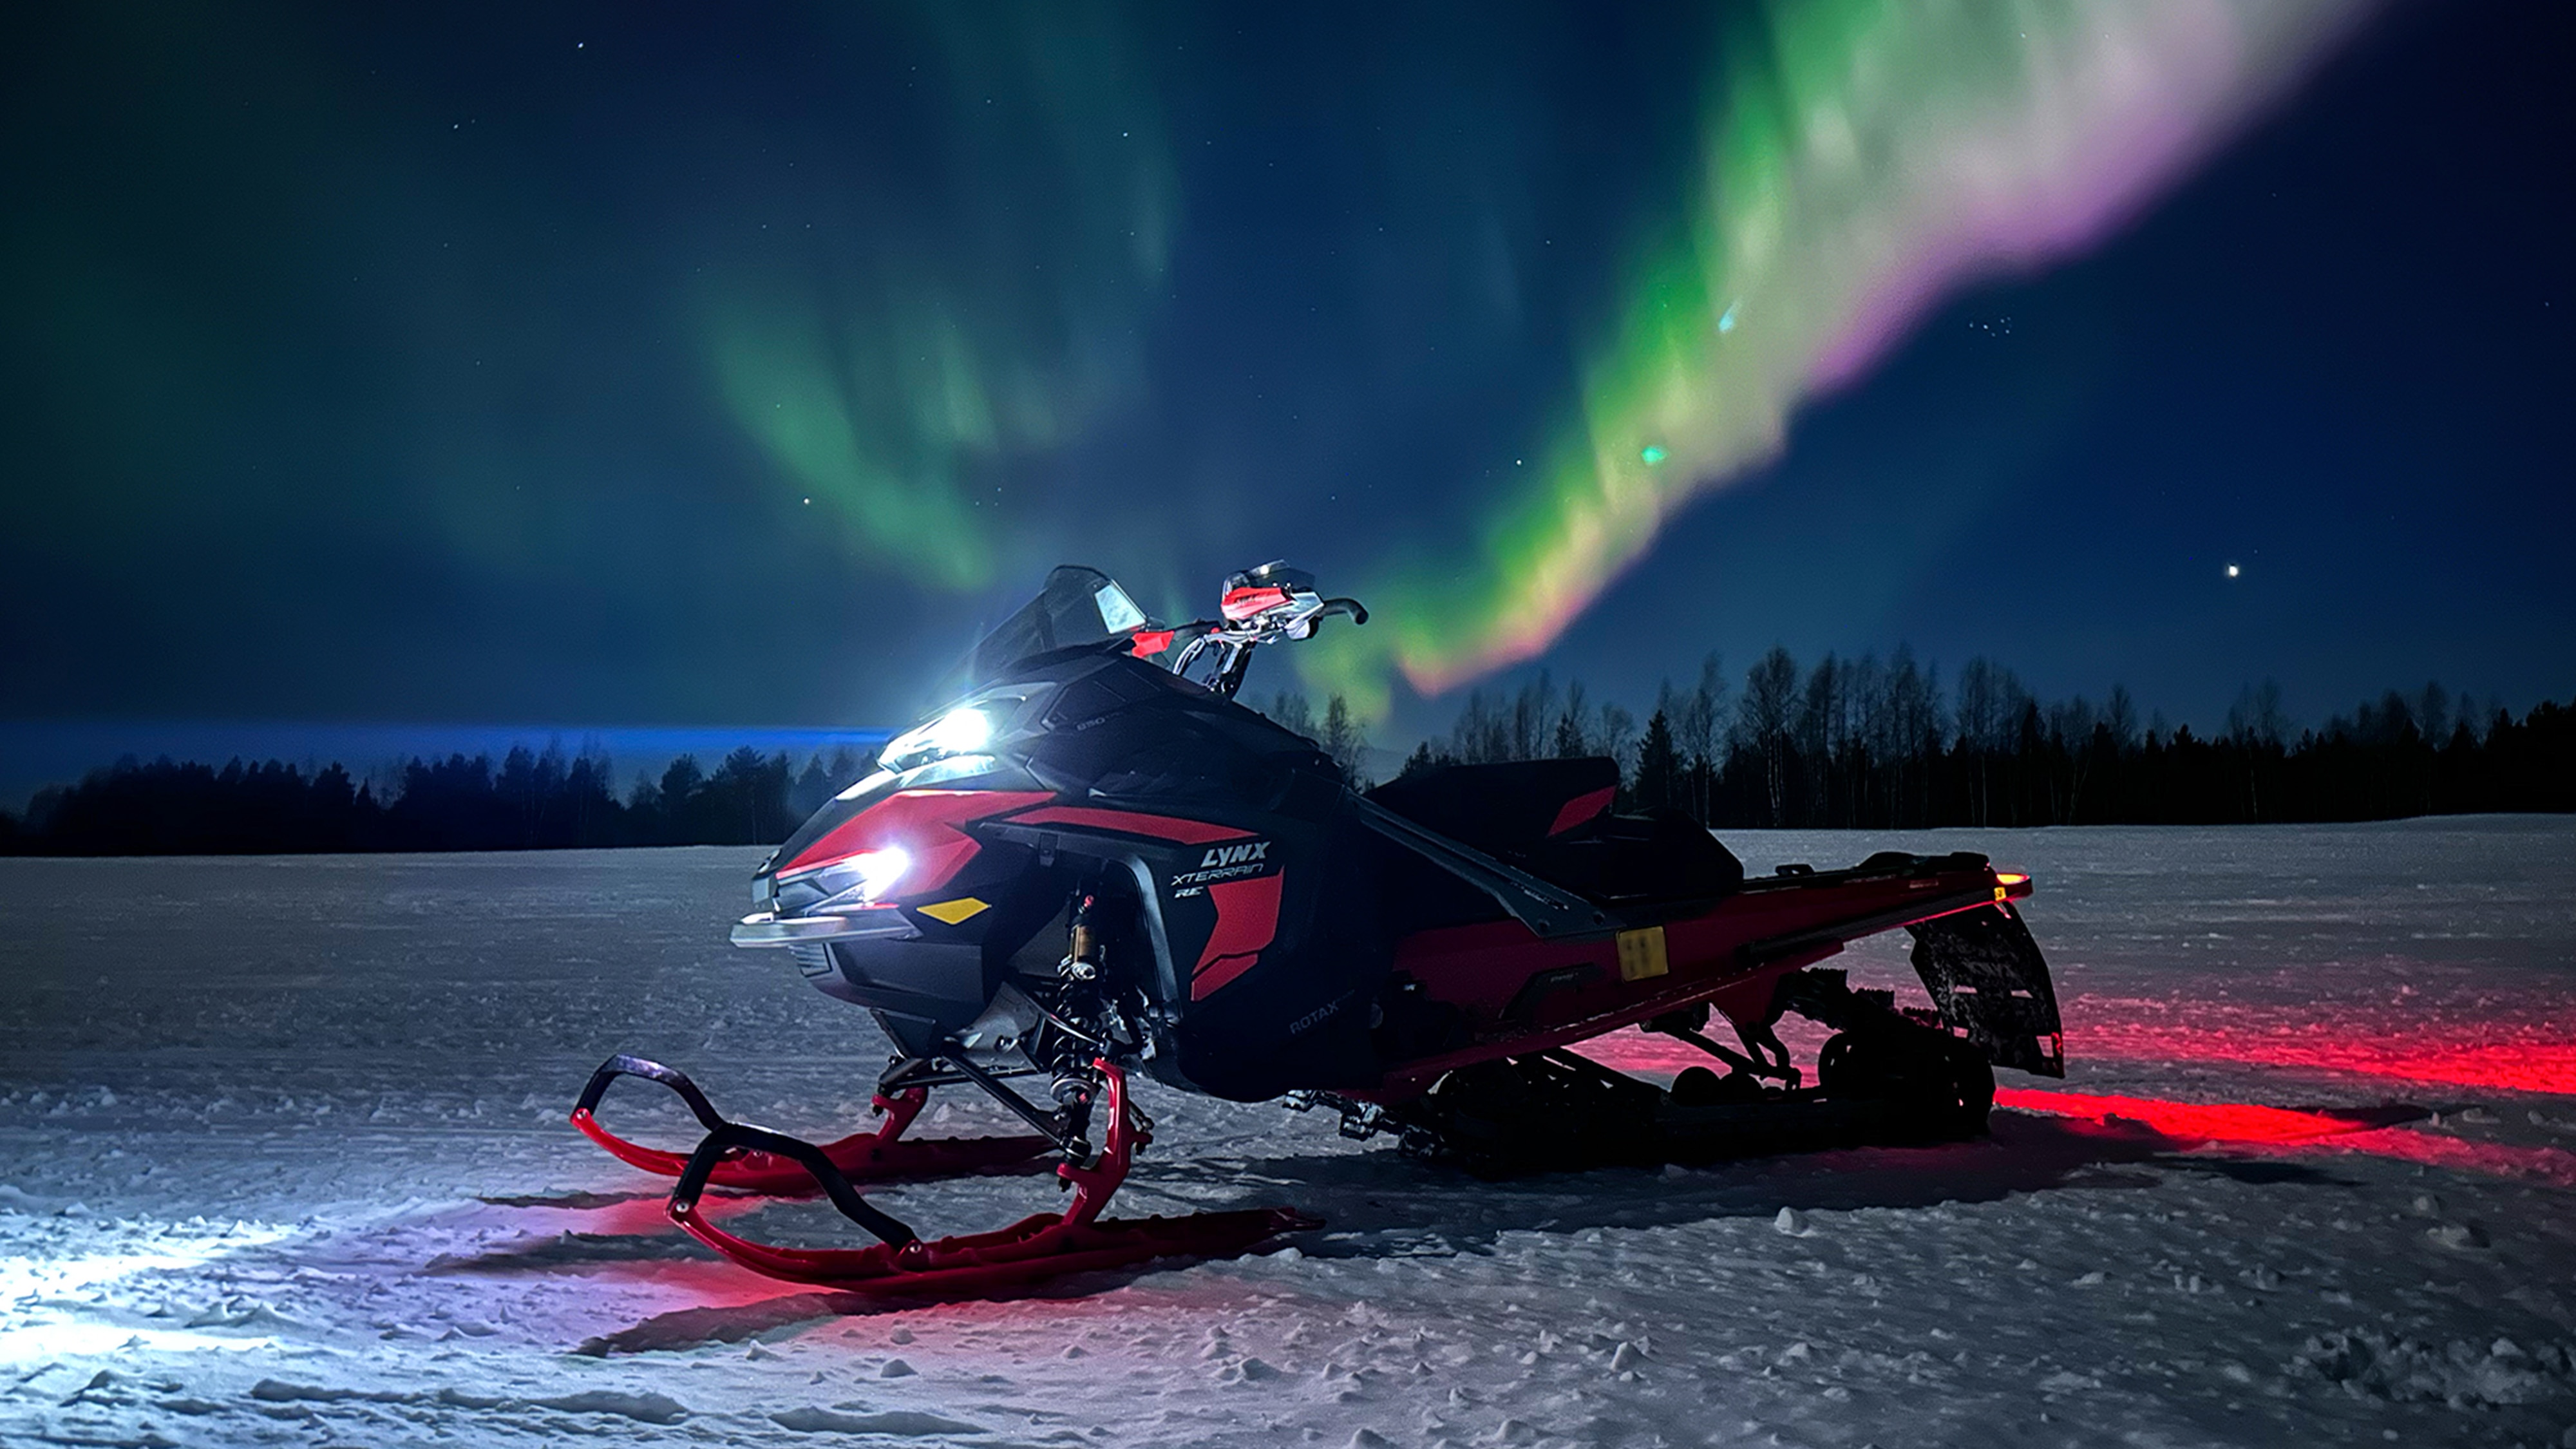 Joni Maununen taking a selfie next to Lynx Xterrain RE 850 E-TEC snowmobile